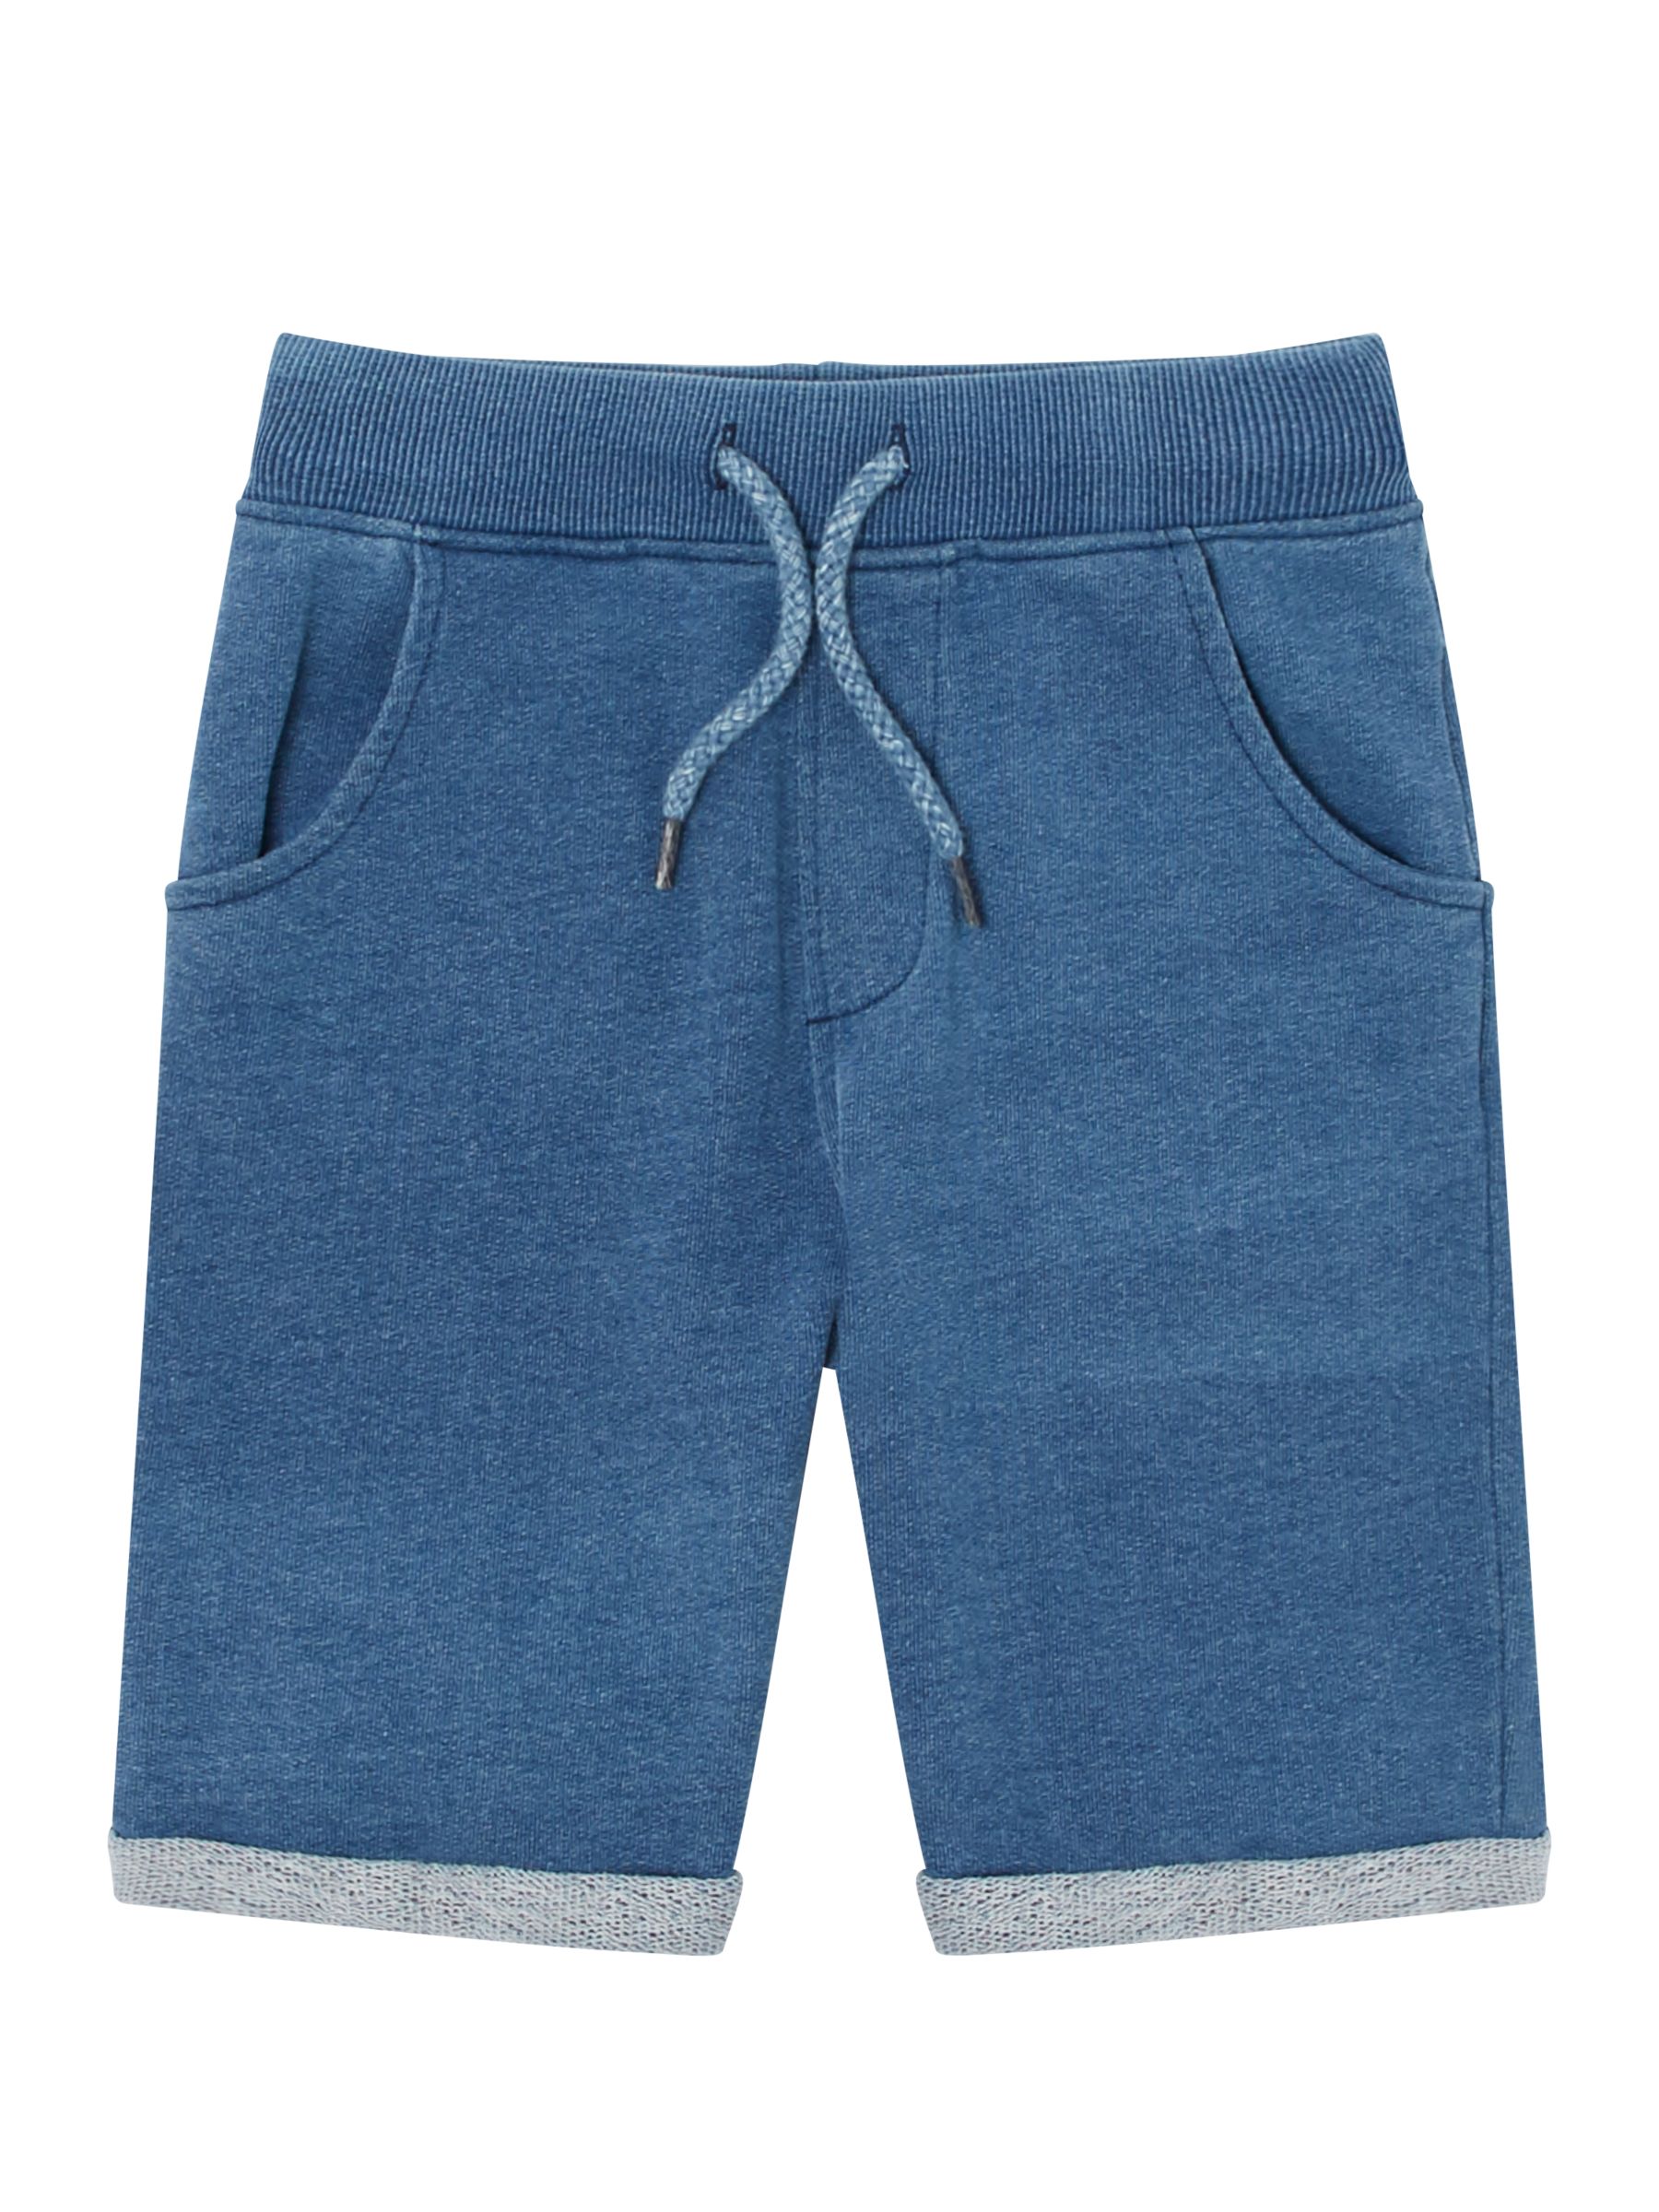 John Lewis & Partners Boys' Denim Jersey Shorts, Blue